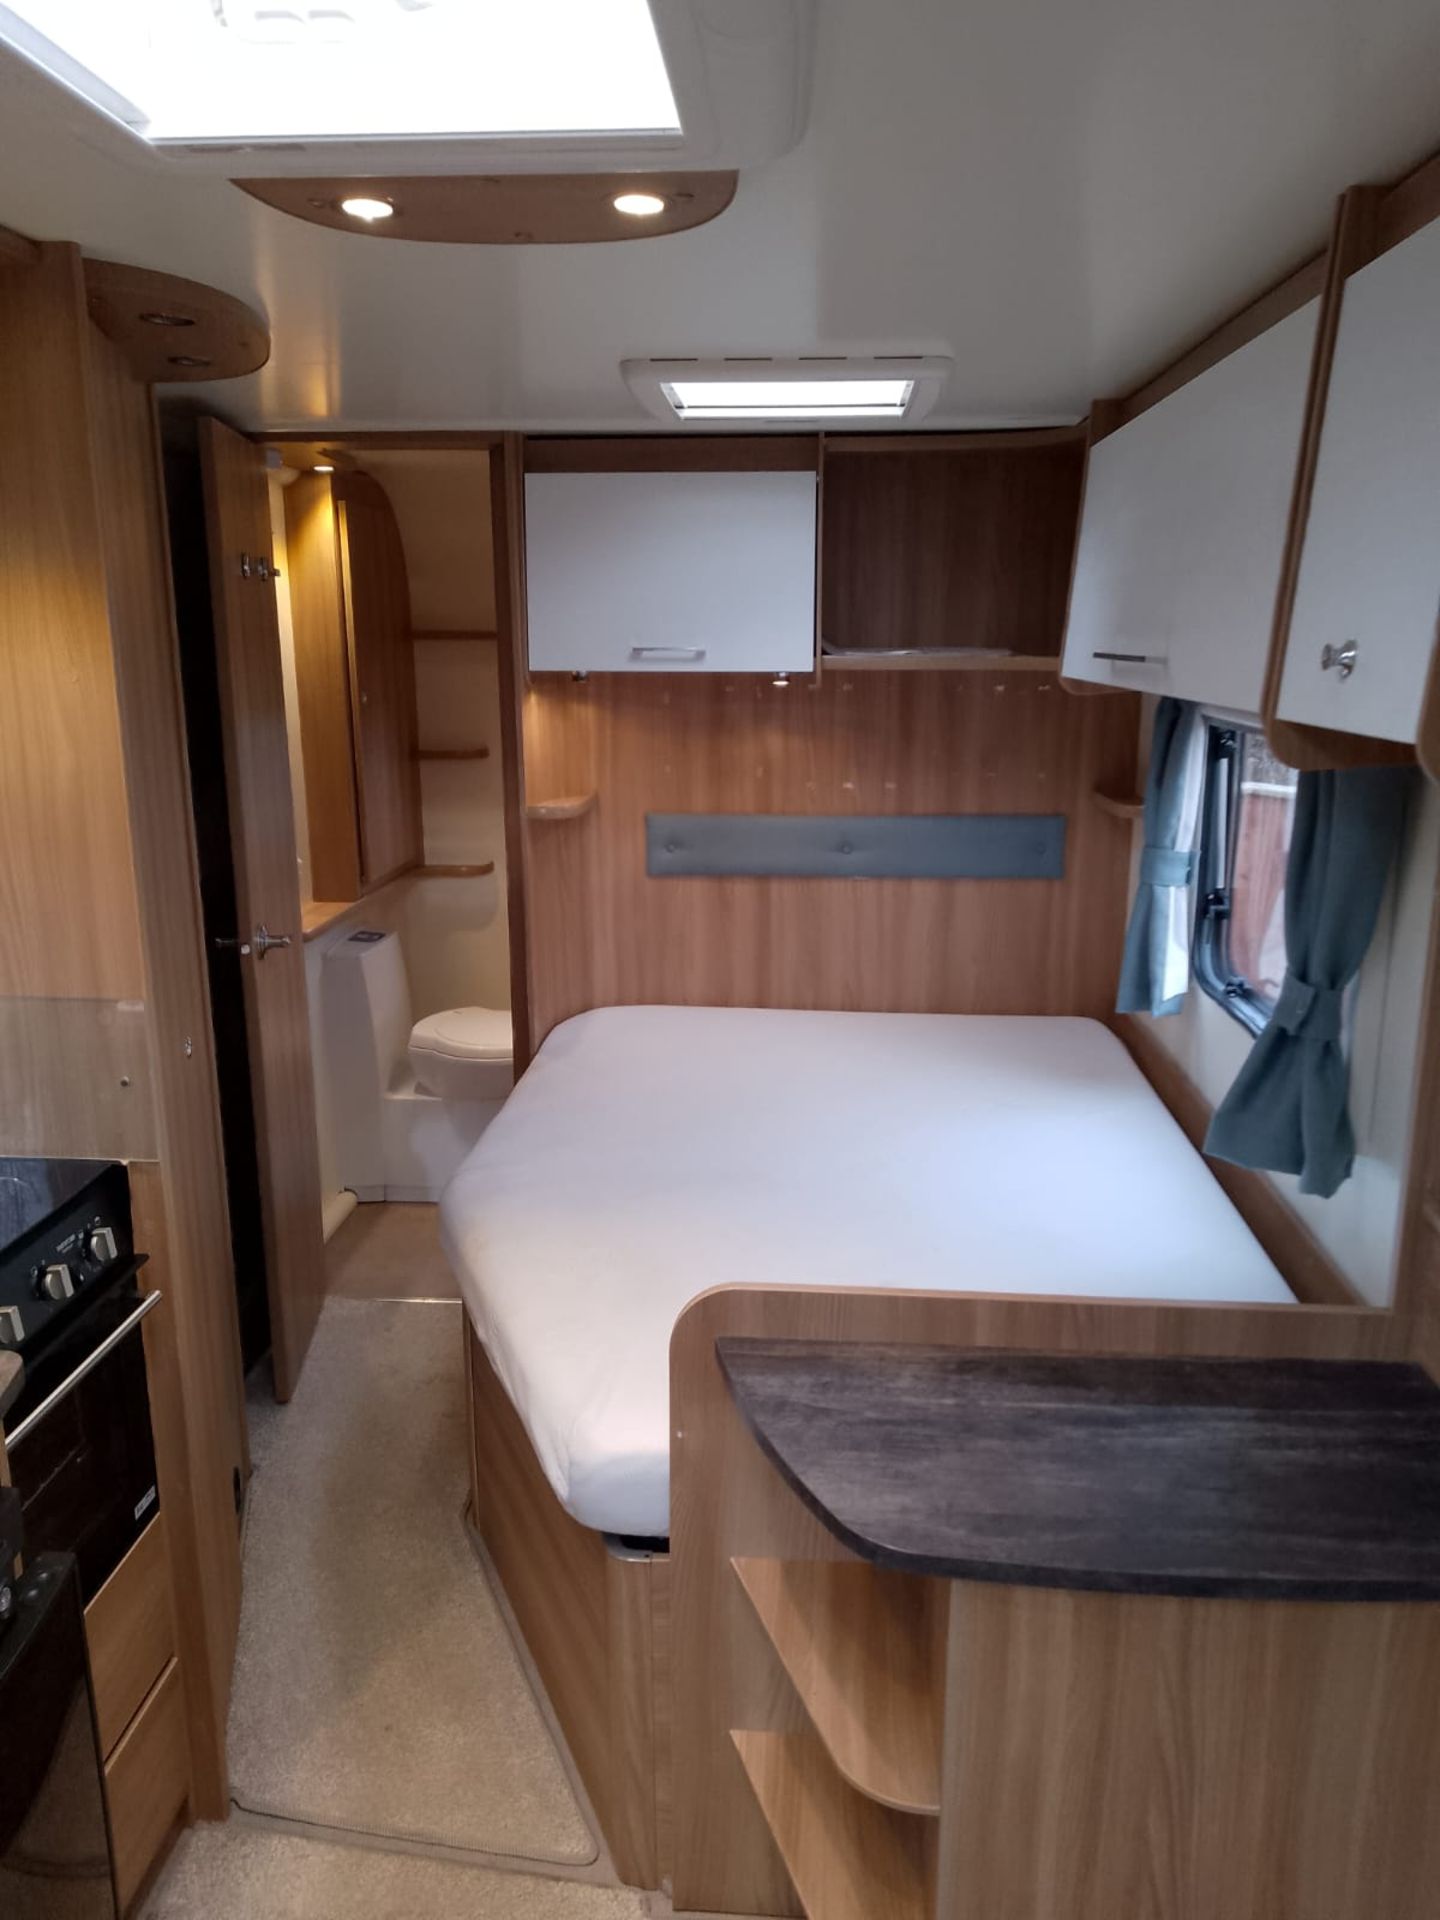 2018 BAILEY PERSUIT 430/4 4 BERTH TOURING CARAVAN FIXED BED - Image 3 of 10